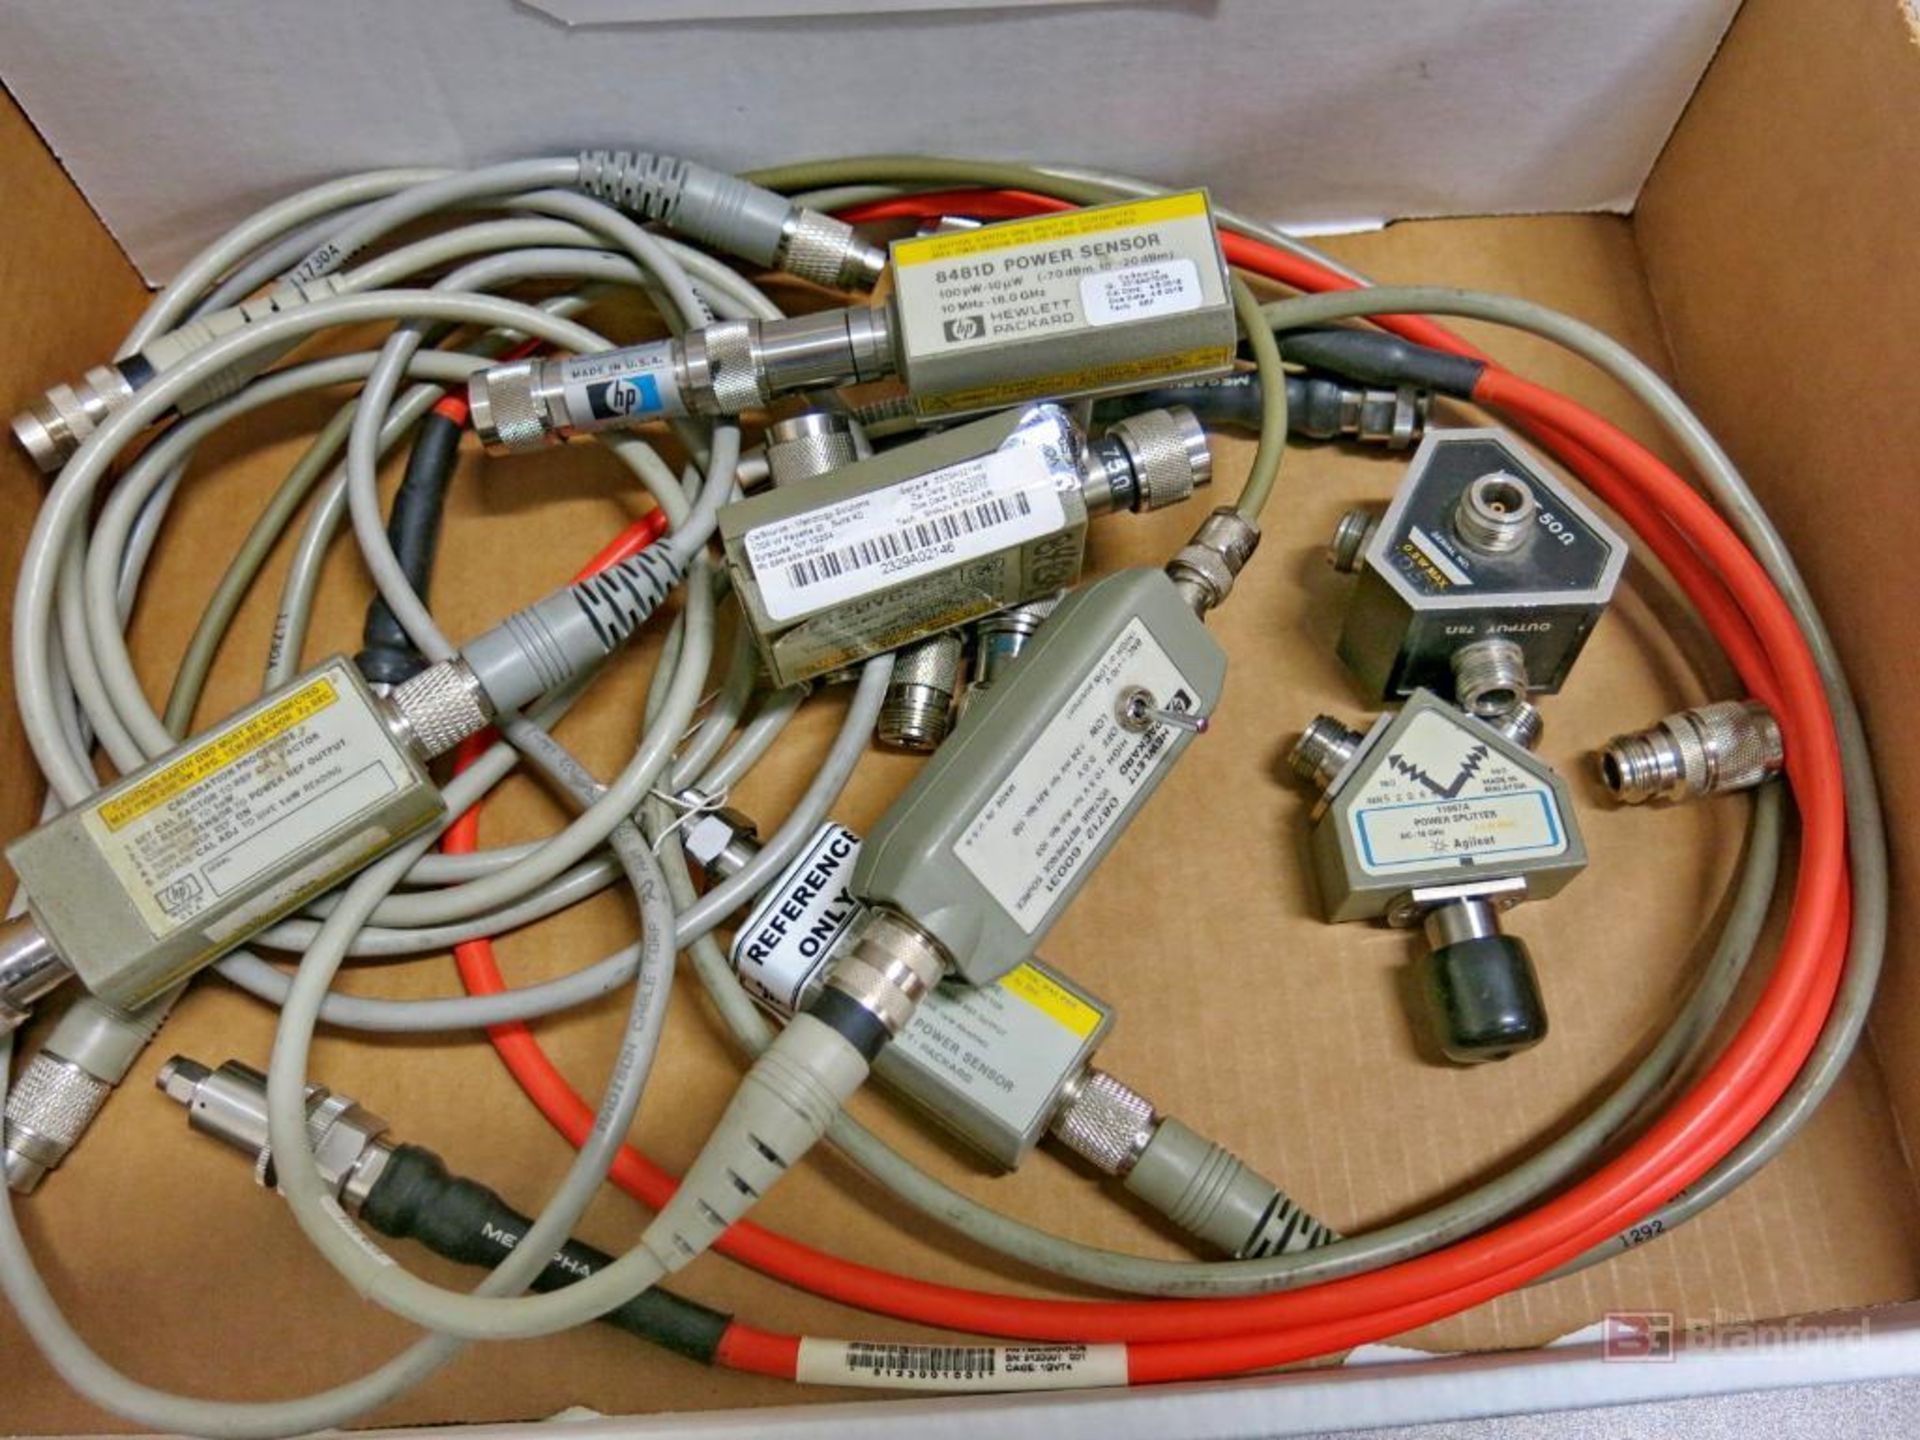 Assorted HP Power Sensors, Assorted Power Splitters